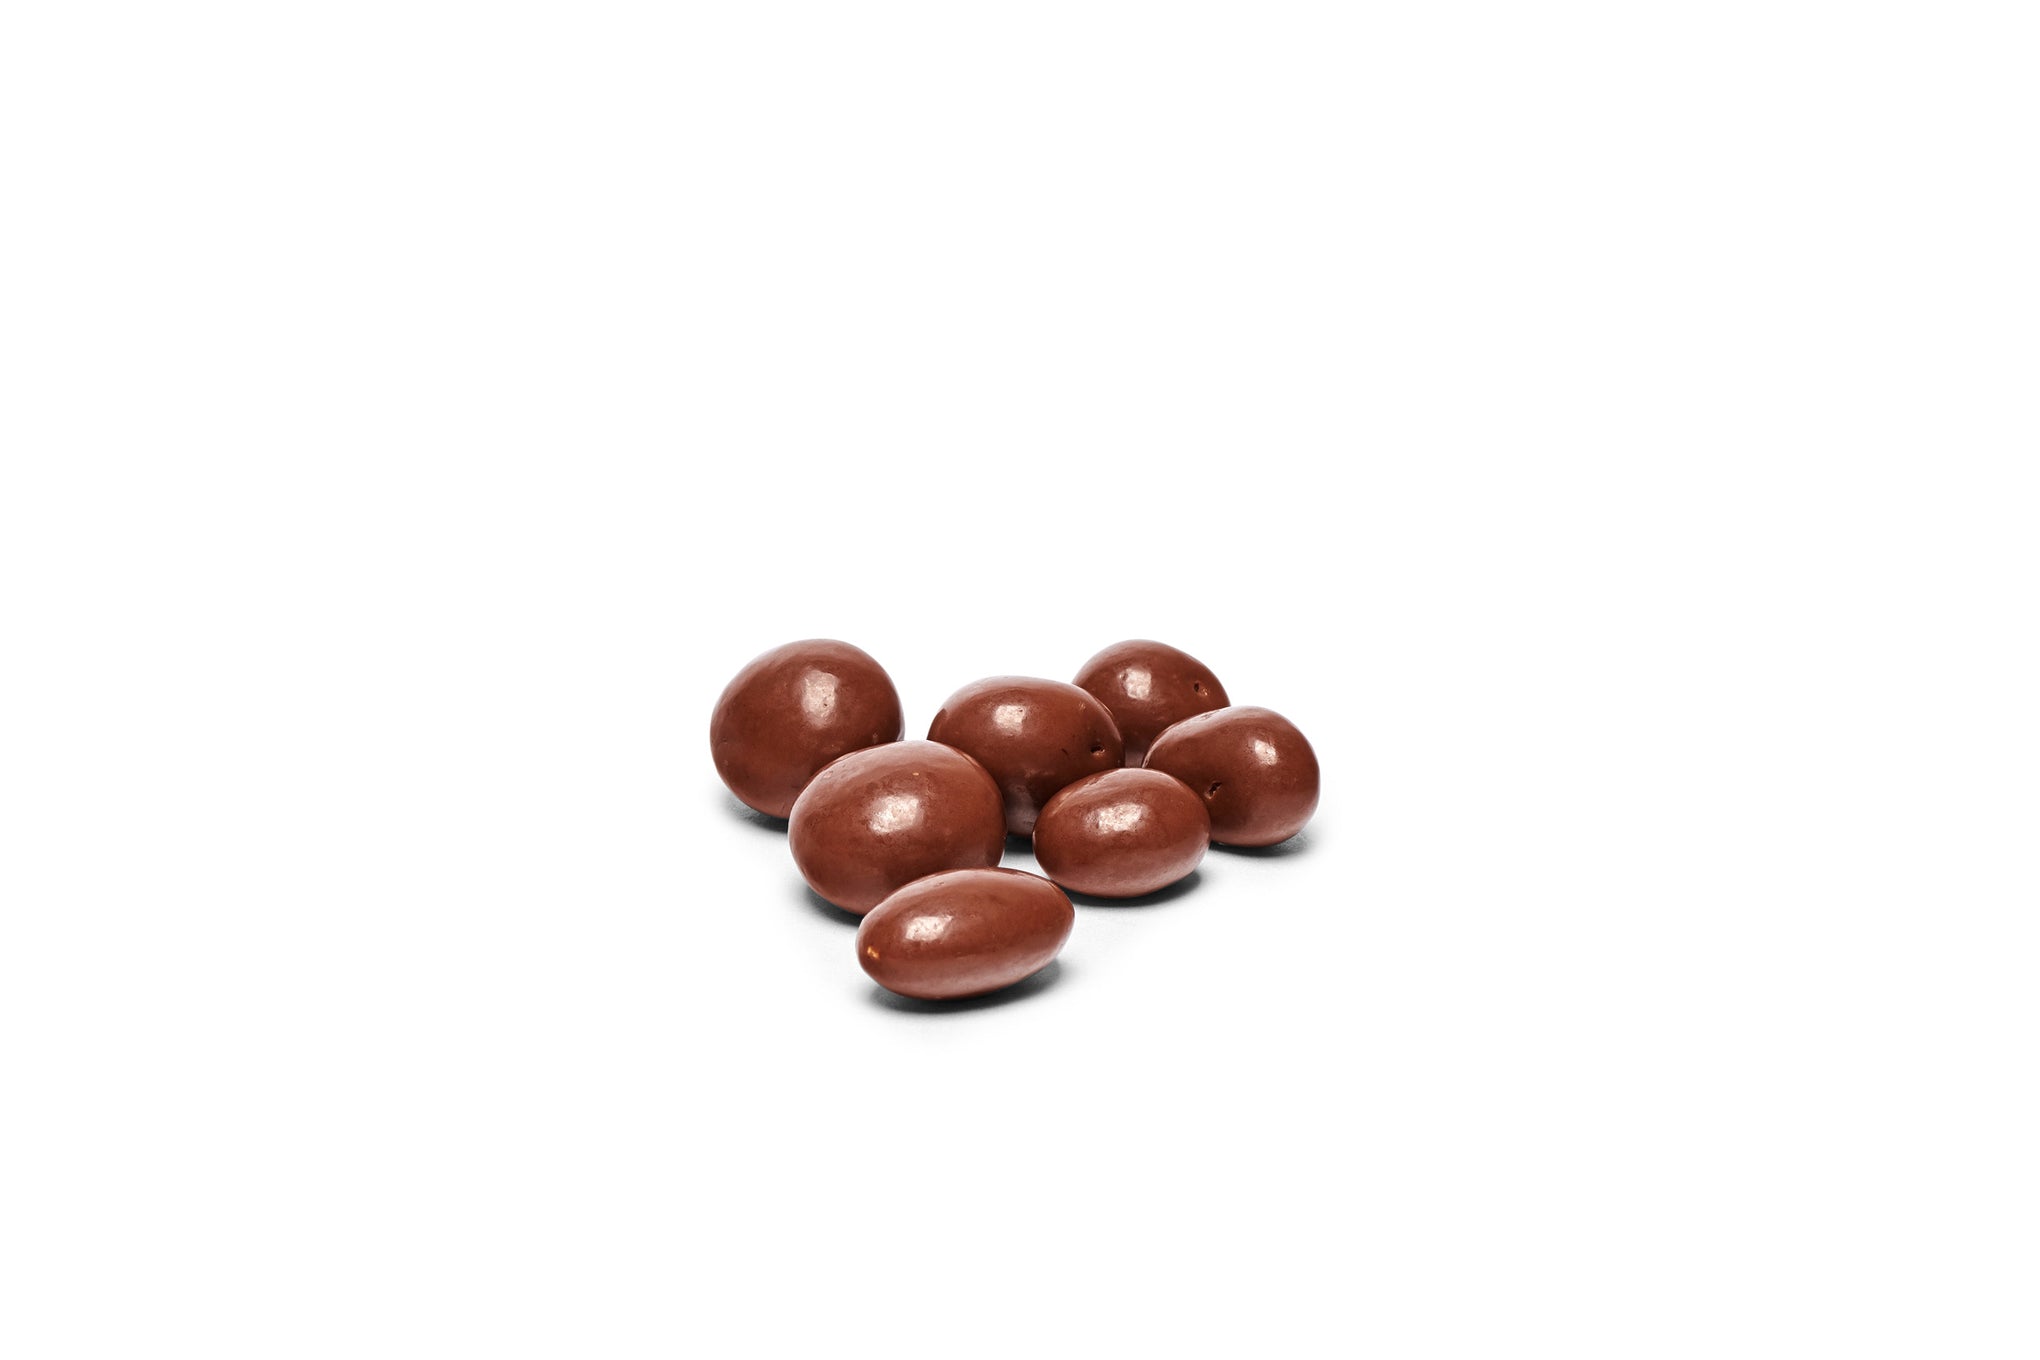 Fruity Nutty Drops | Milk Chocolate